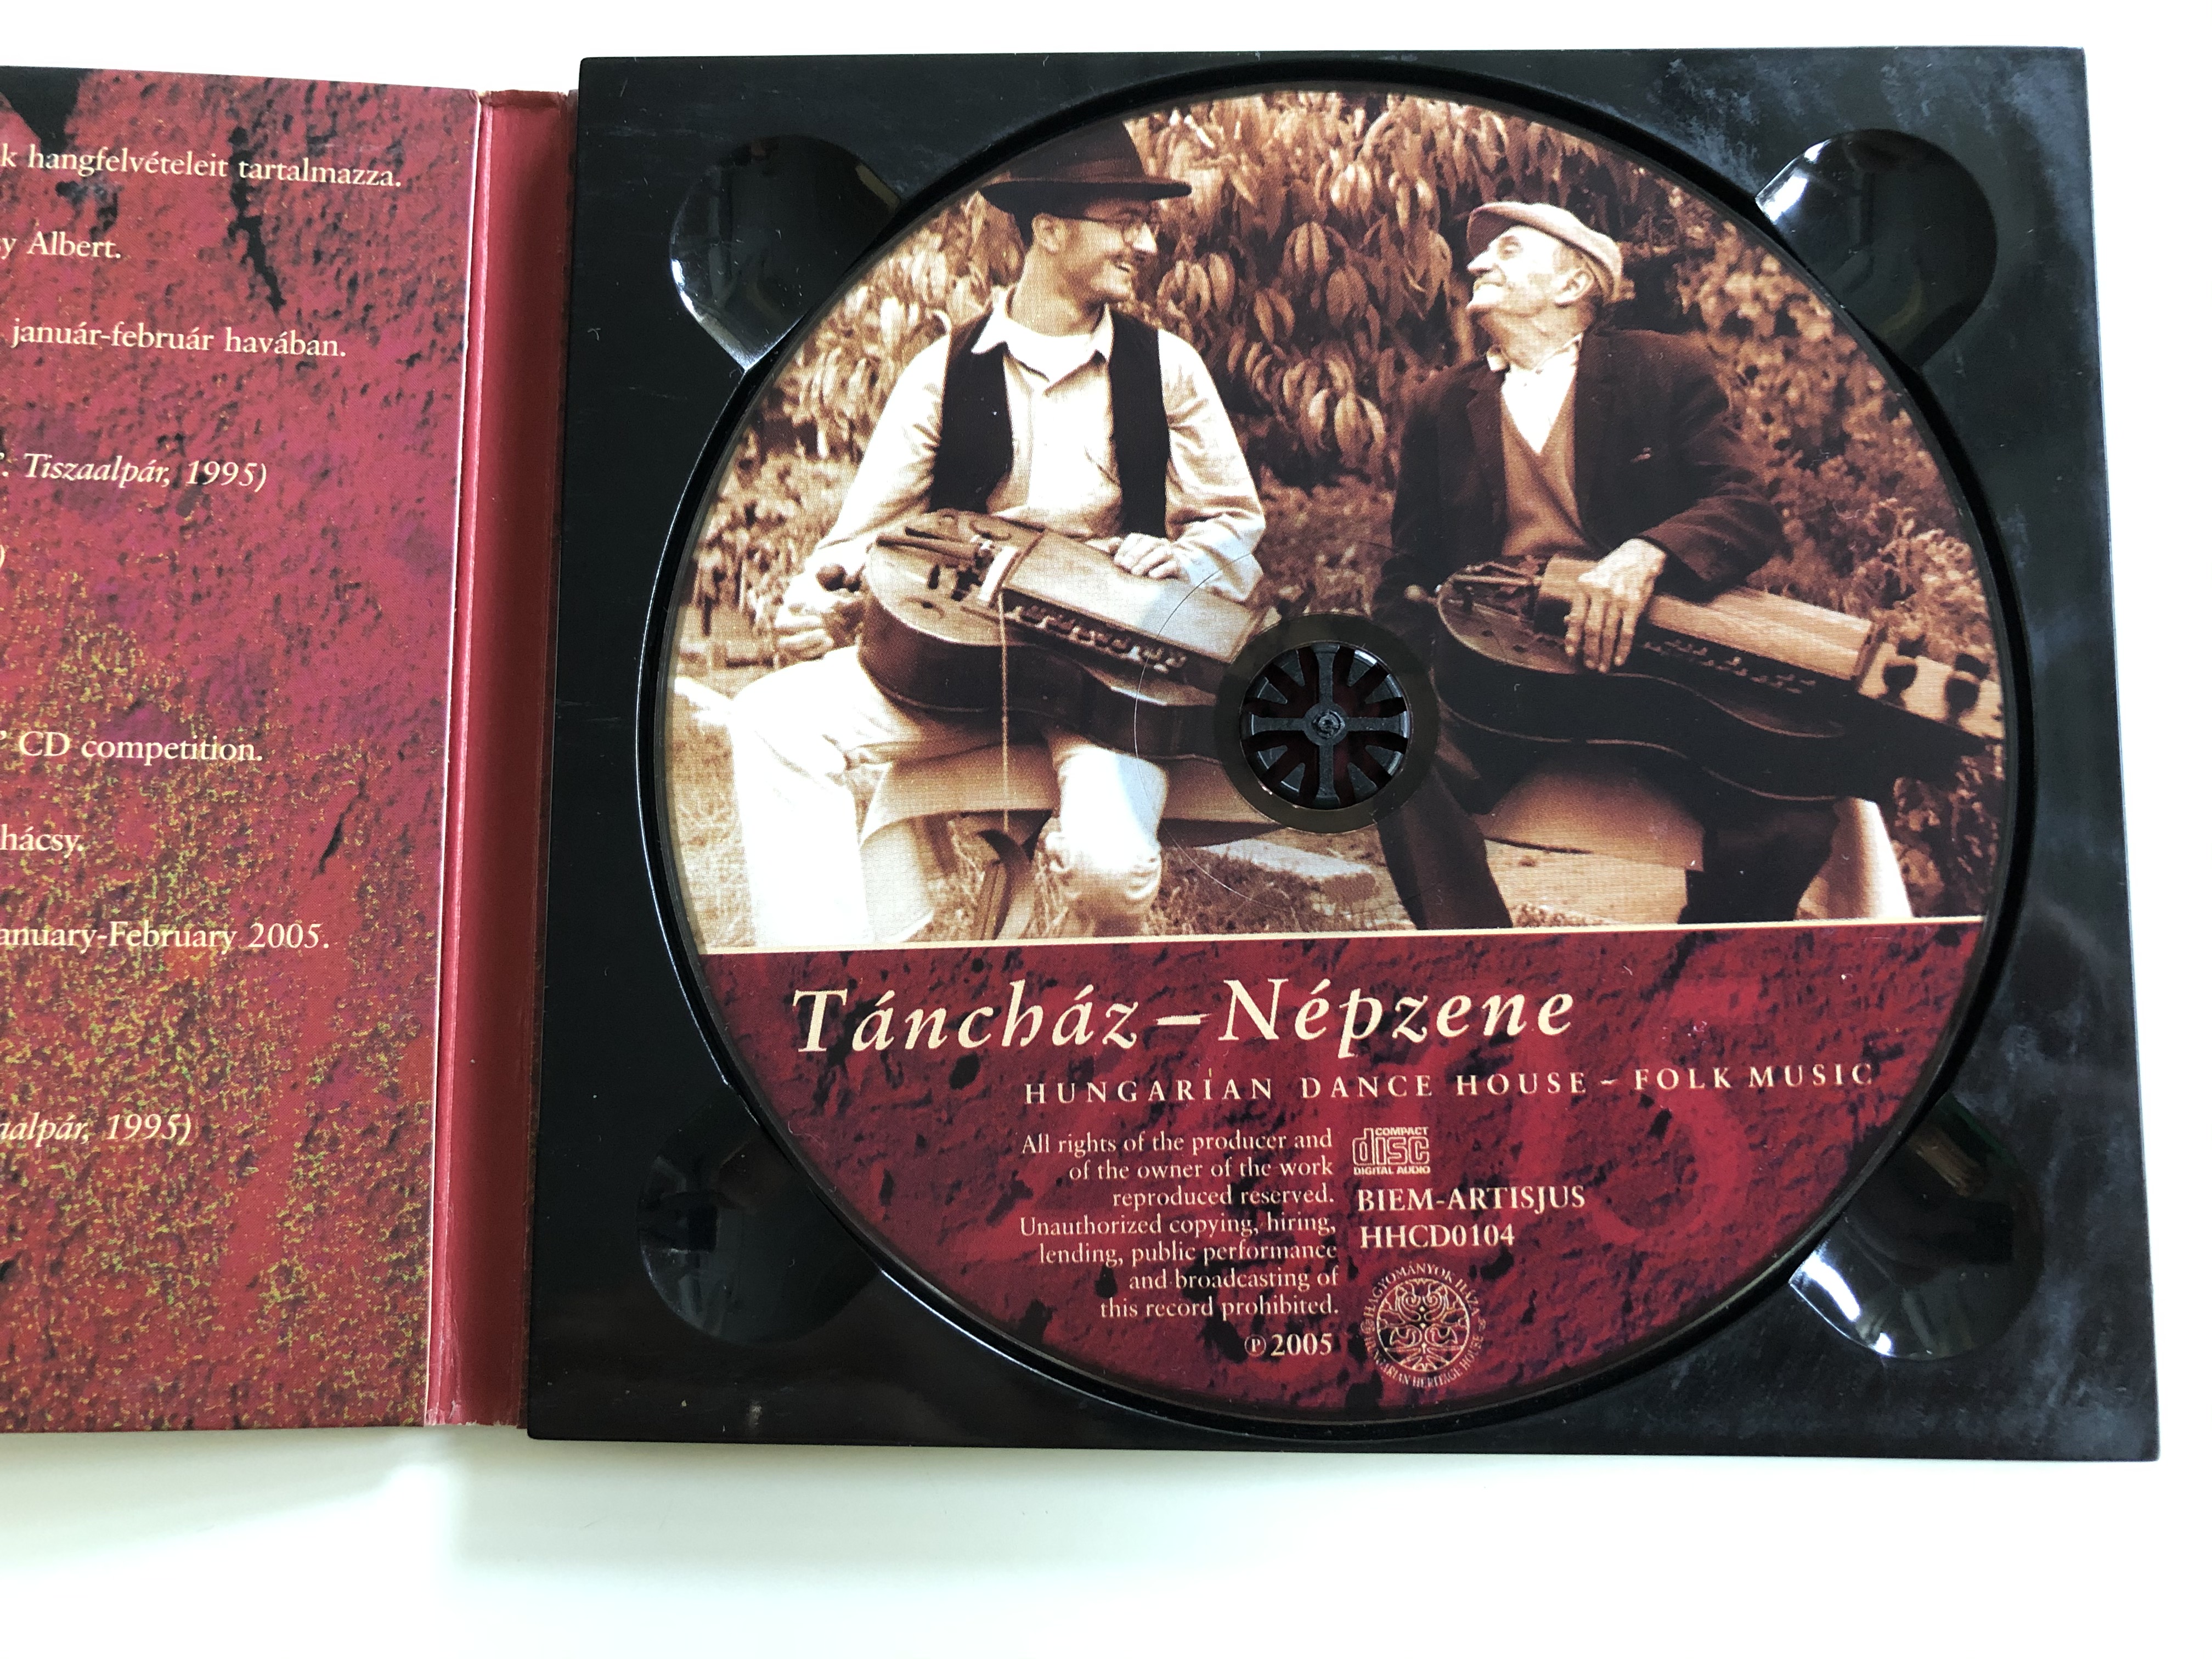 t-nch-z-n-pzene-2005-hungarian-dance-house-folk-music-hagyom-nyok-h-za-audio-cd-2005-hhcd0104-3-.jpg